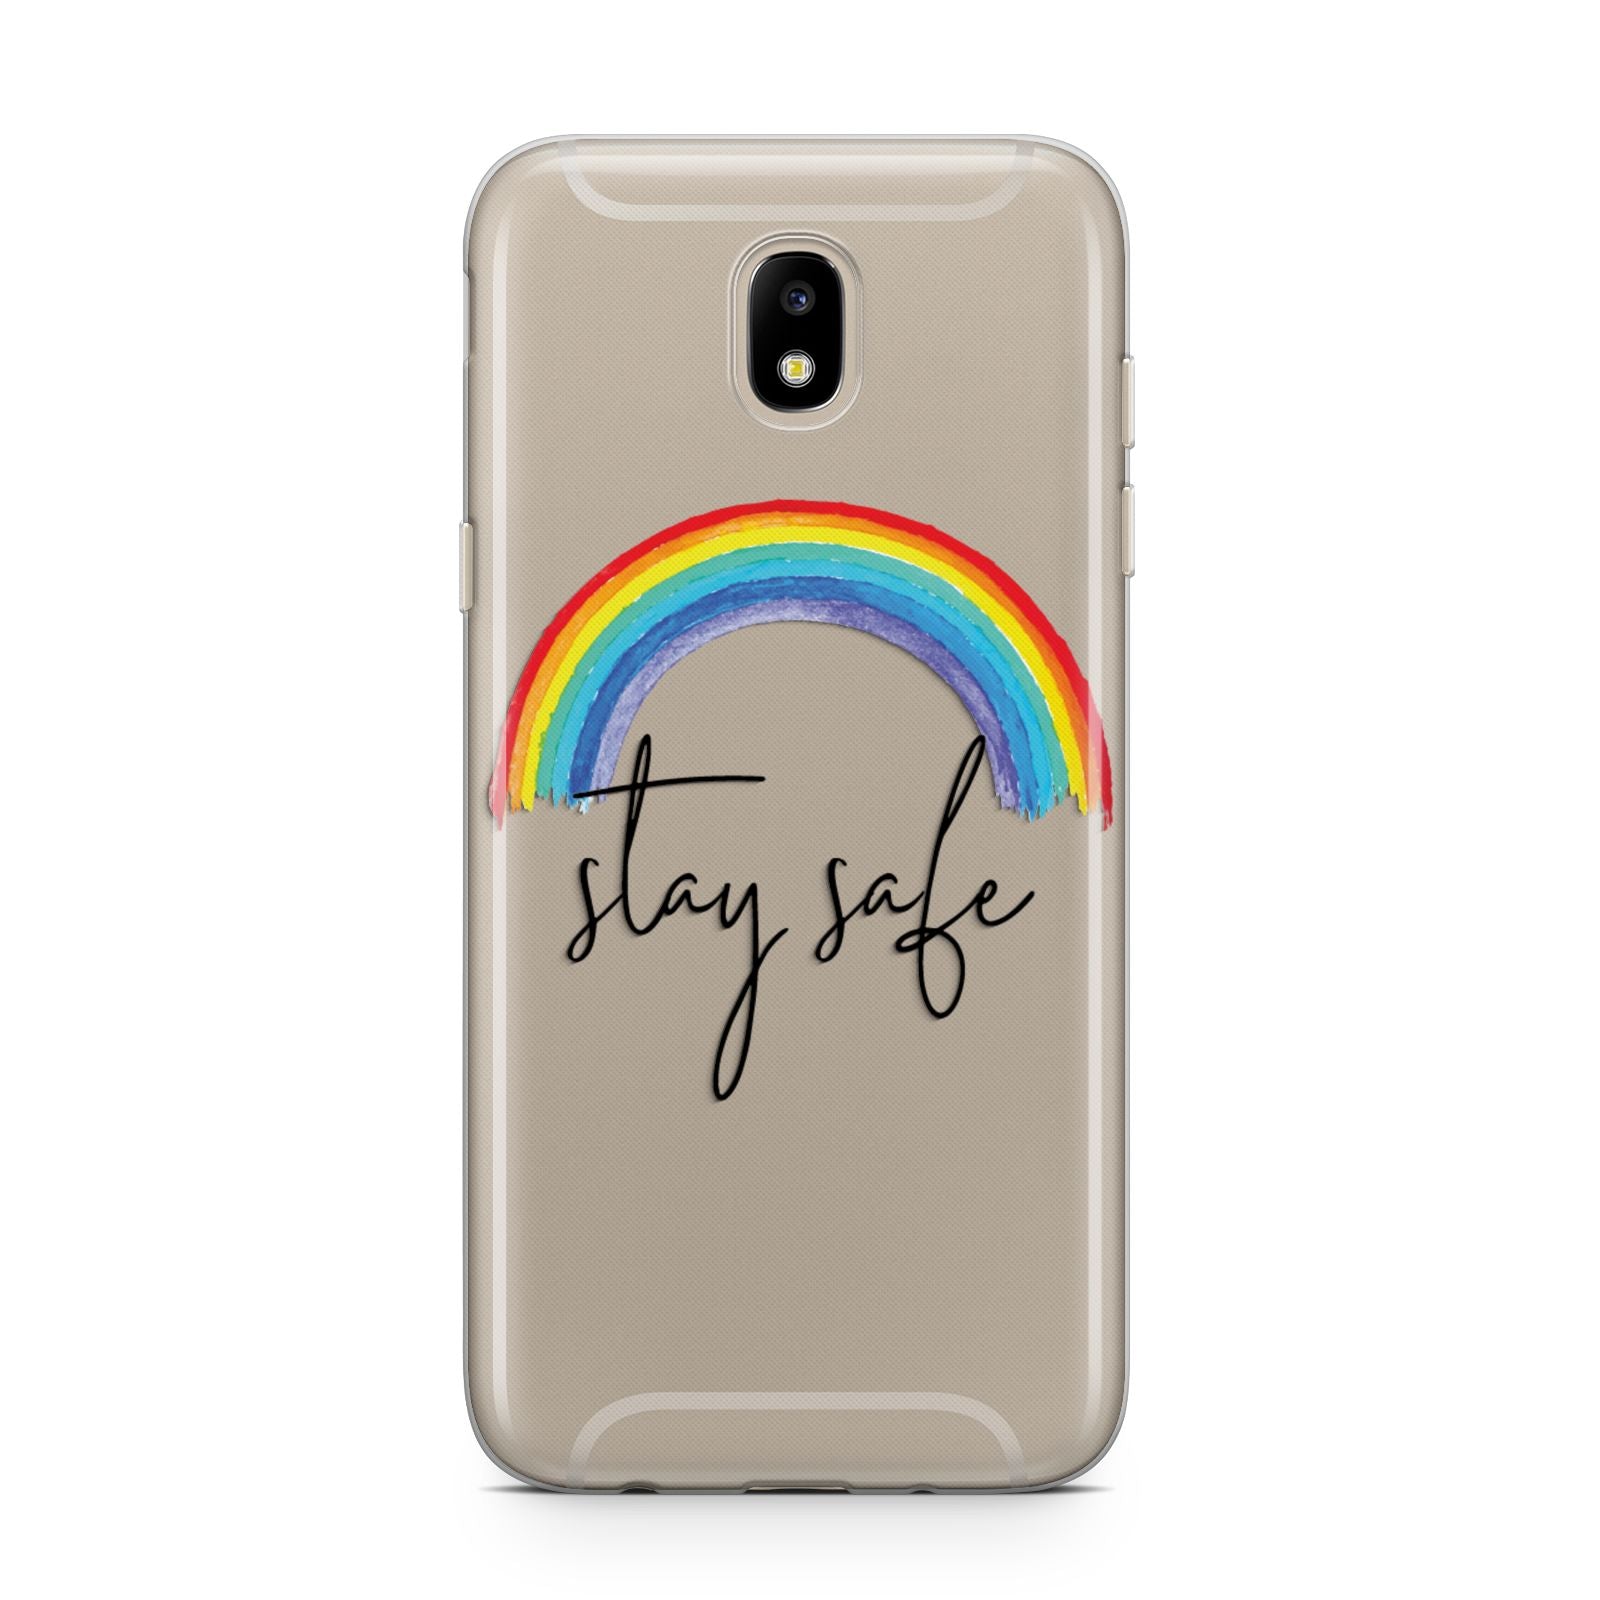 Stay Safe Rainbow Samsung J5 2017 Case